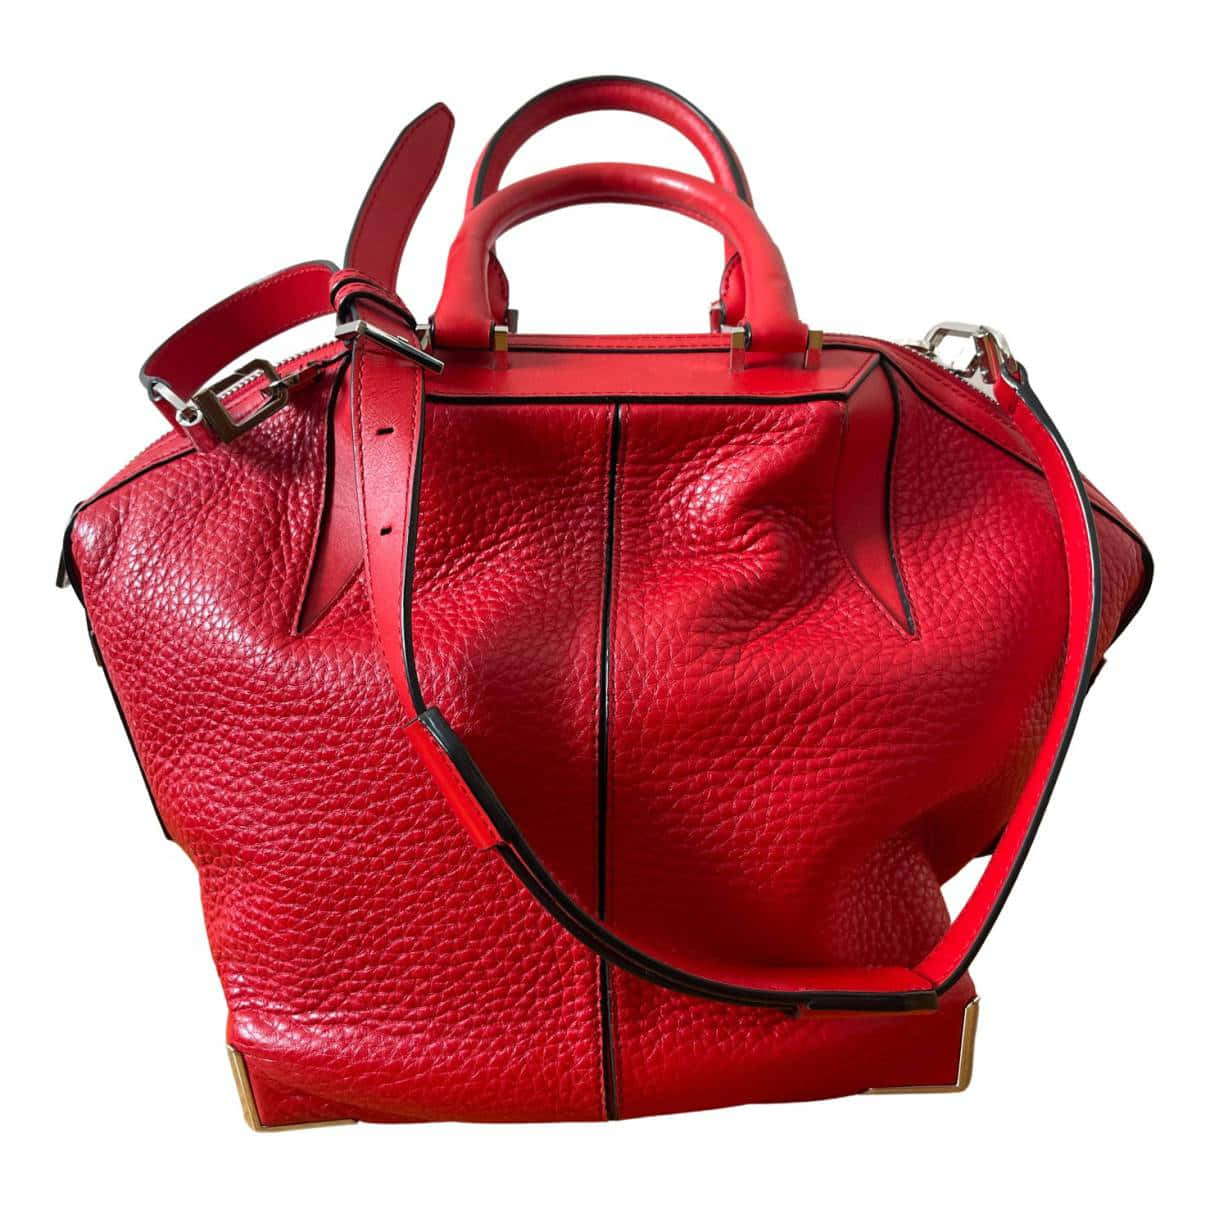 Caption: Stylish Red Handbag for Fashion-Forward Women Wallpaper